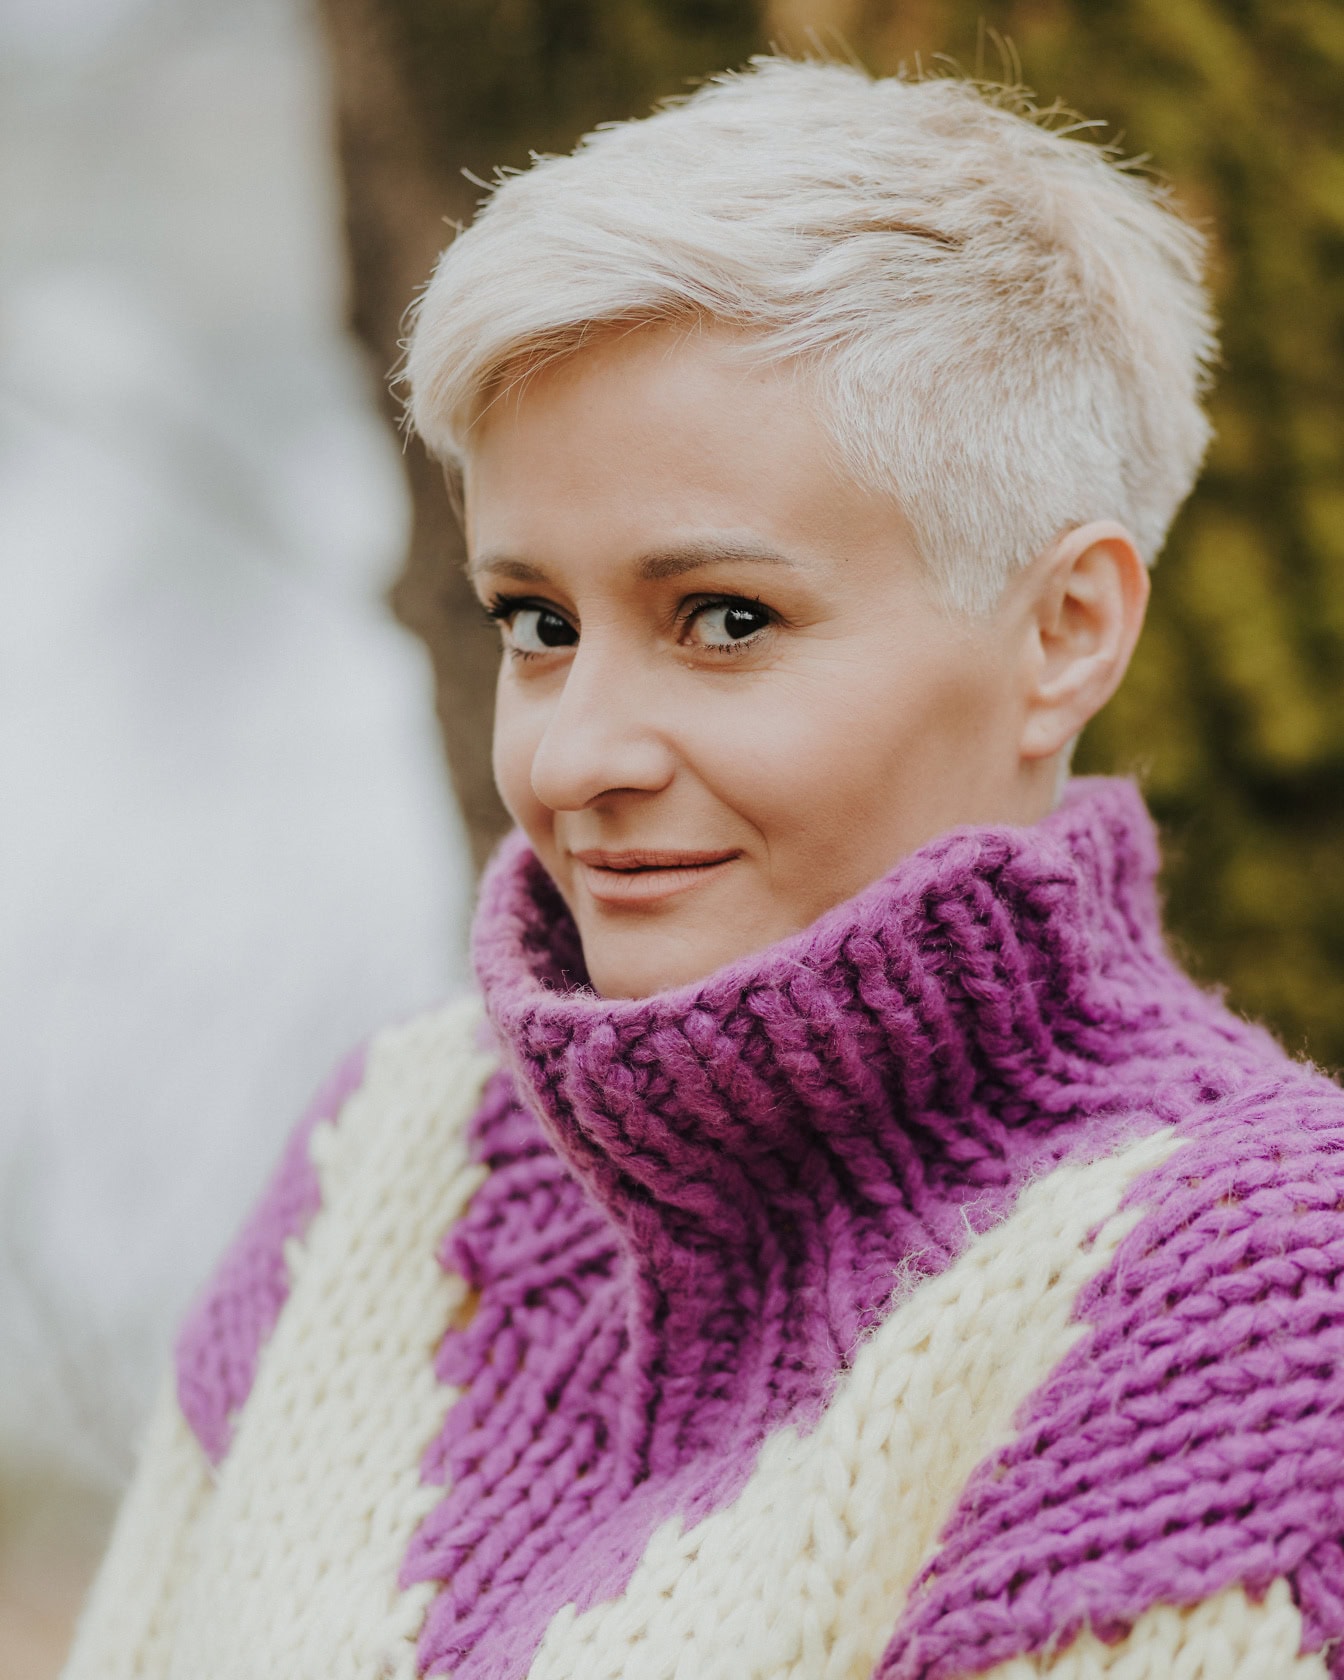 Potret close-up seorang wanita dengan rambut pirang muda pendek mengenakan sweter rajutan buatan tangan ungu-putih